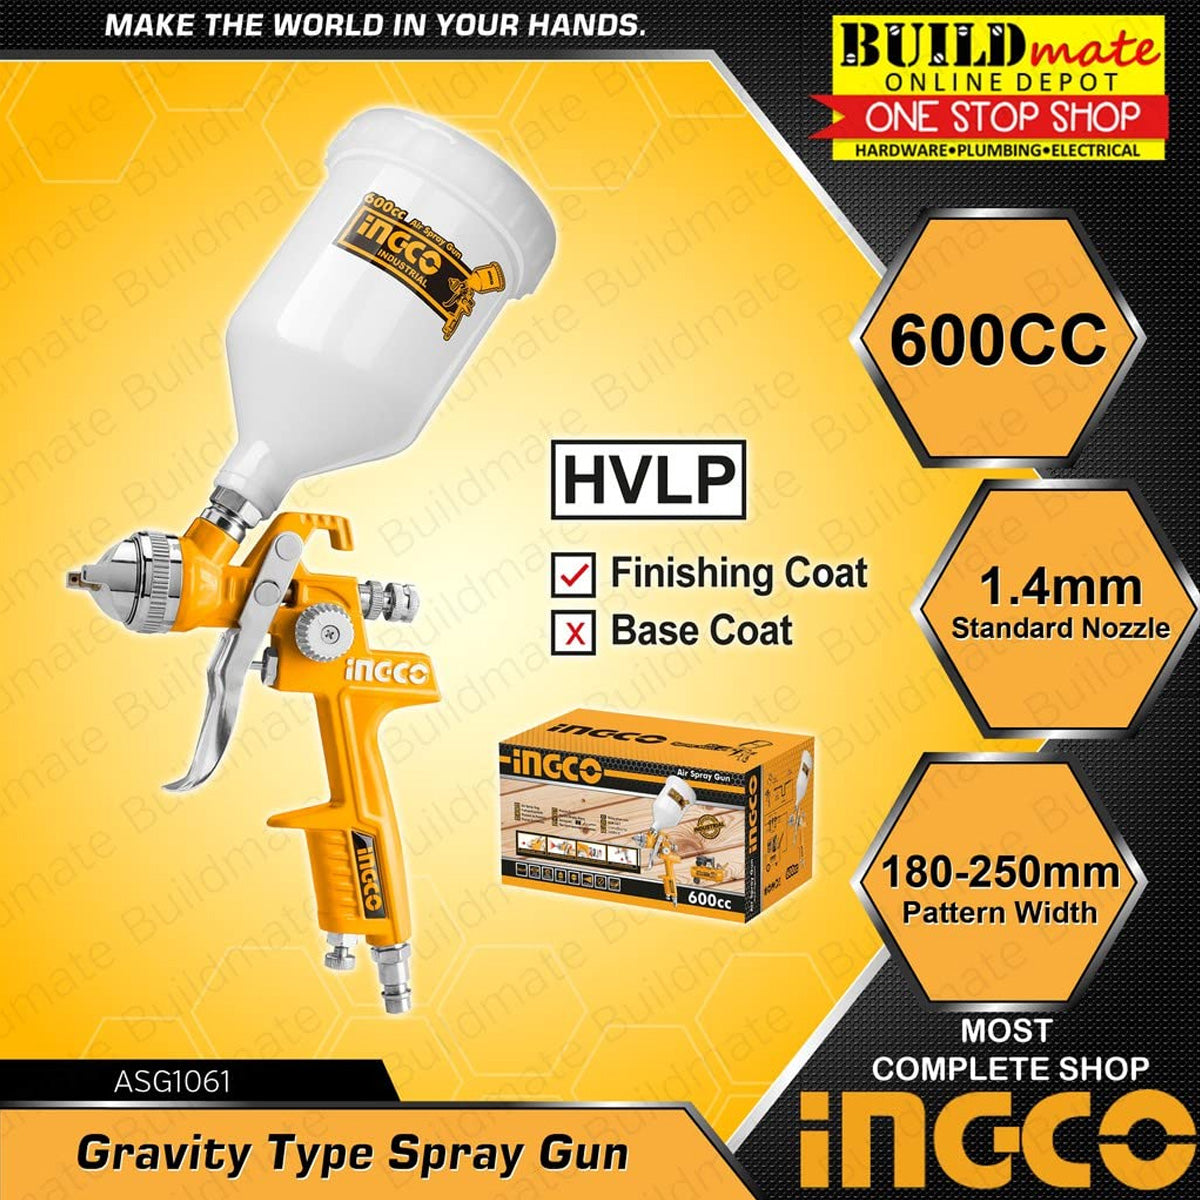 Ingco ASG1061 HVLP Spray Gun - High Volume Low Pressure Electric Paint Sprayer (600cc, 180-250mm, 1.4mm Nozzle